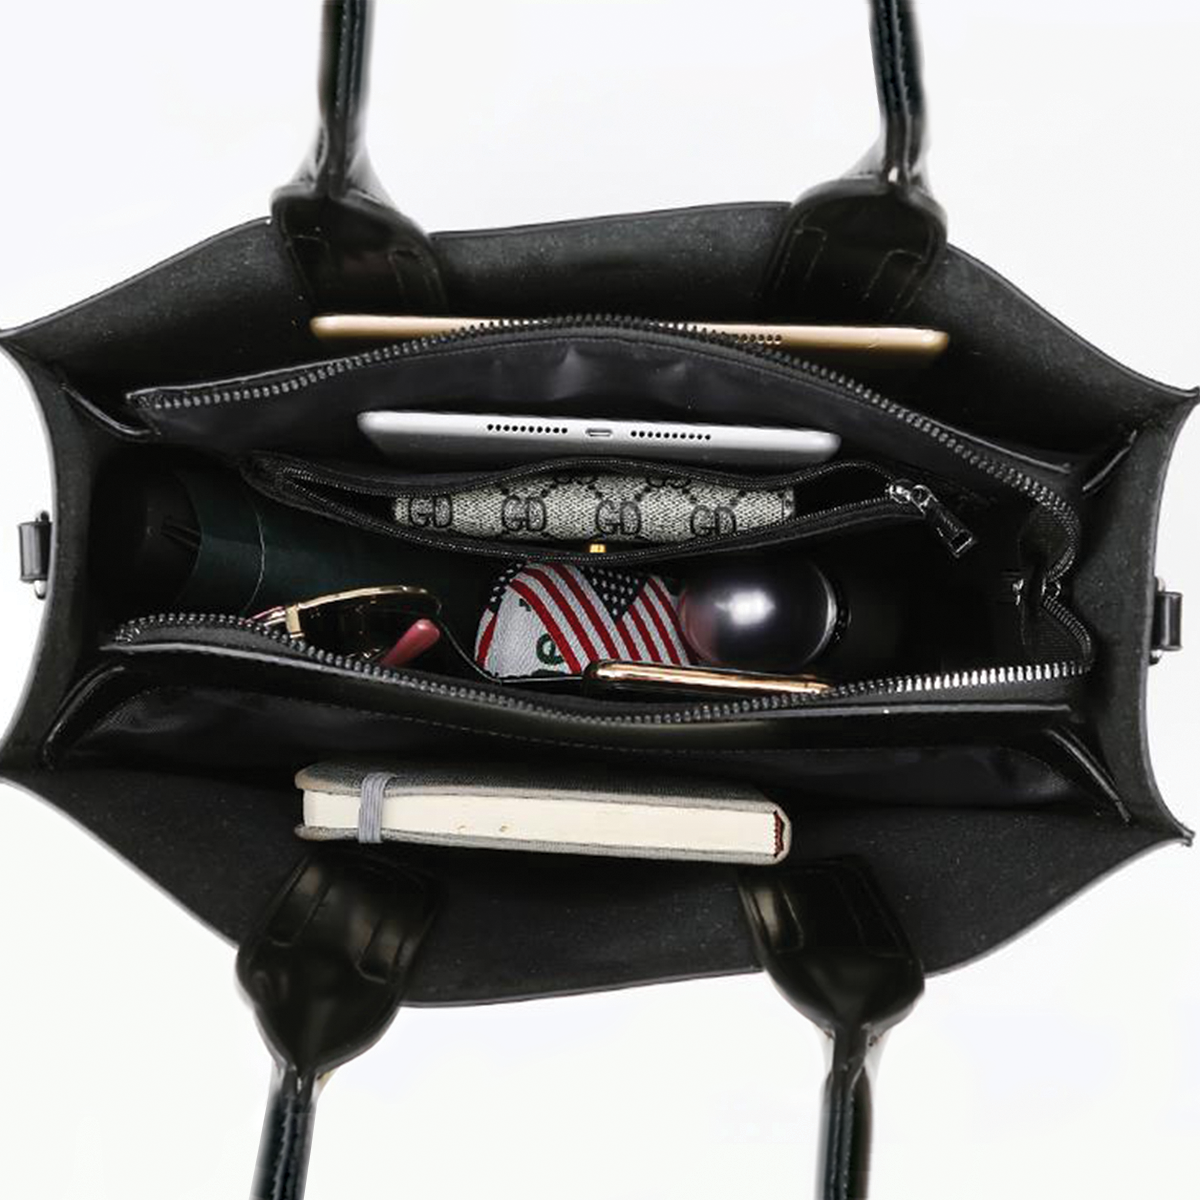 Reduce Stress At Work With French Bulldog - Luxury Handbag V2